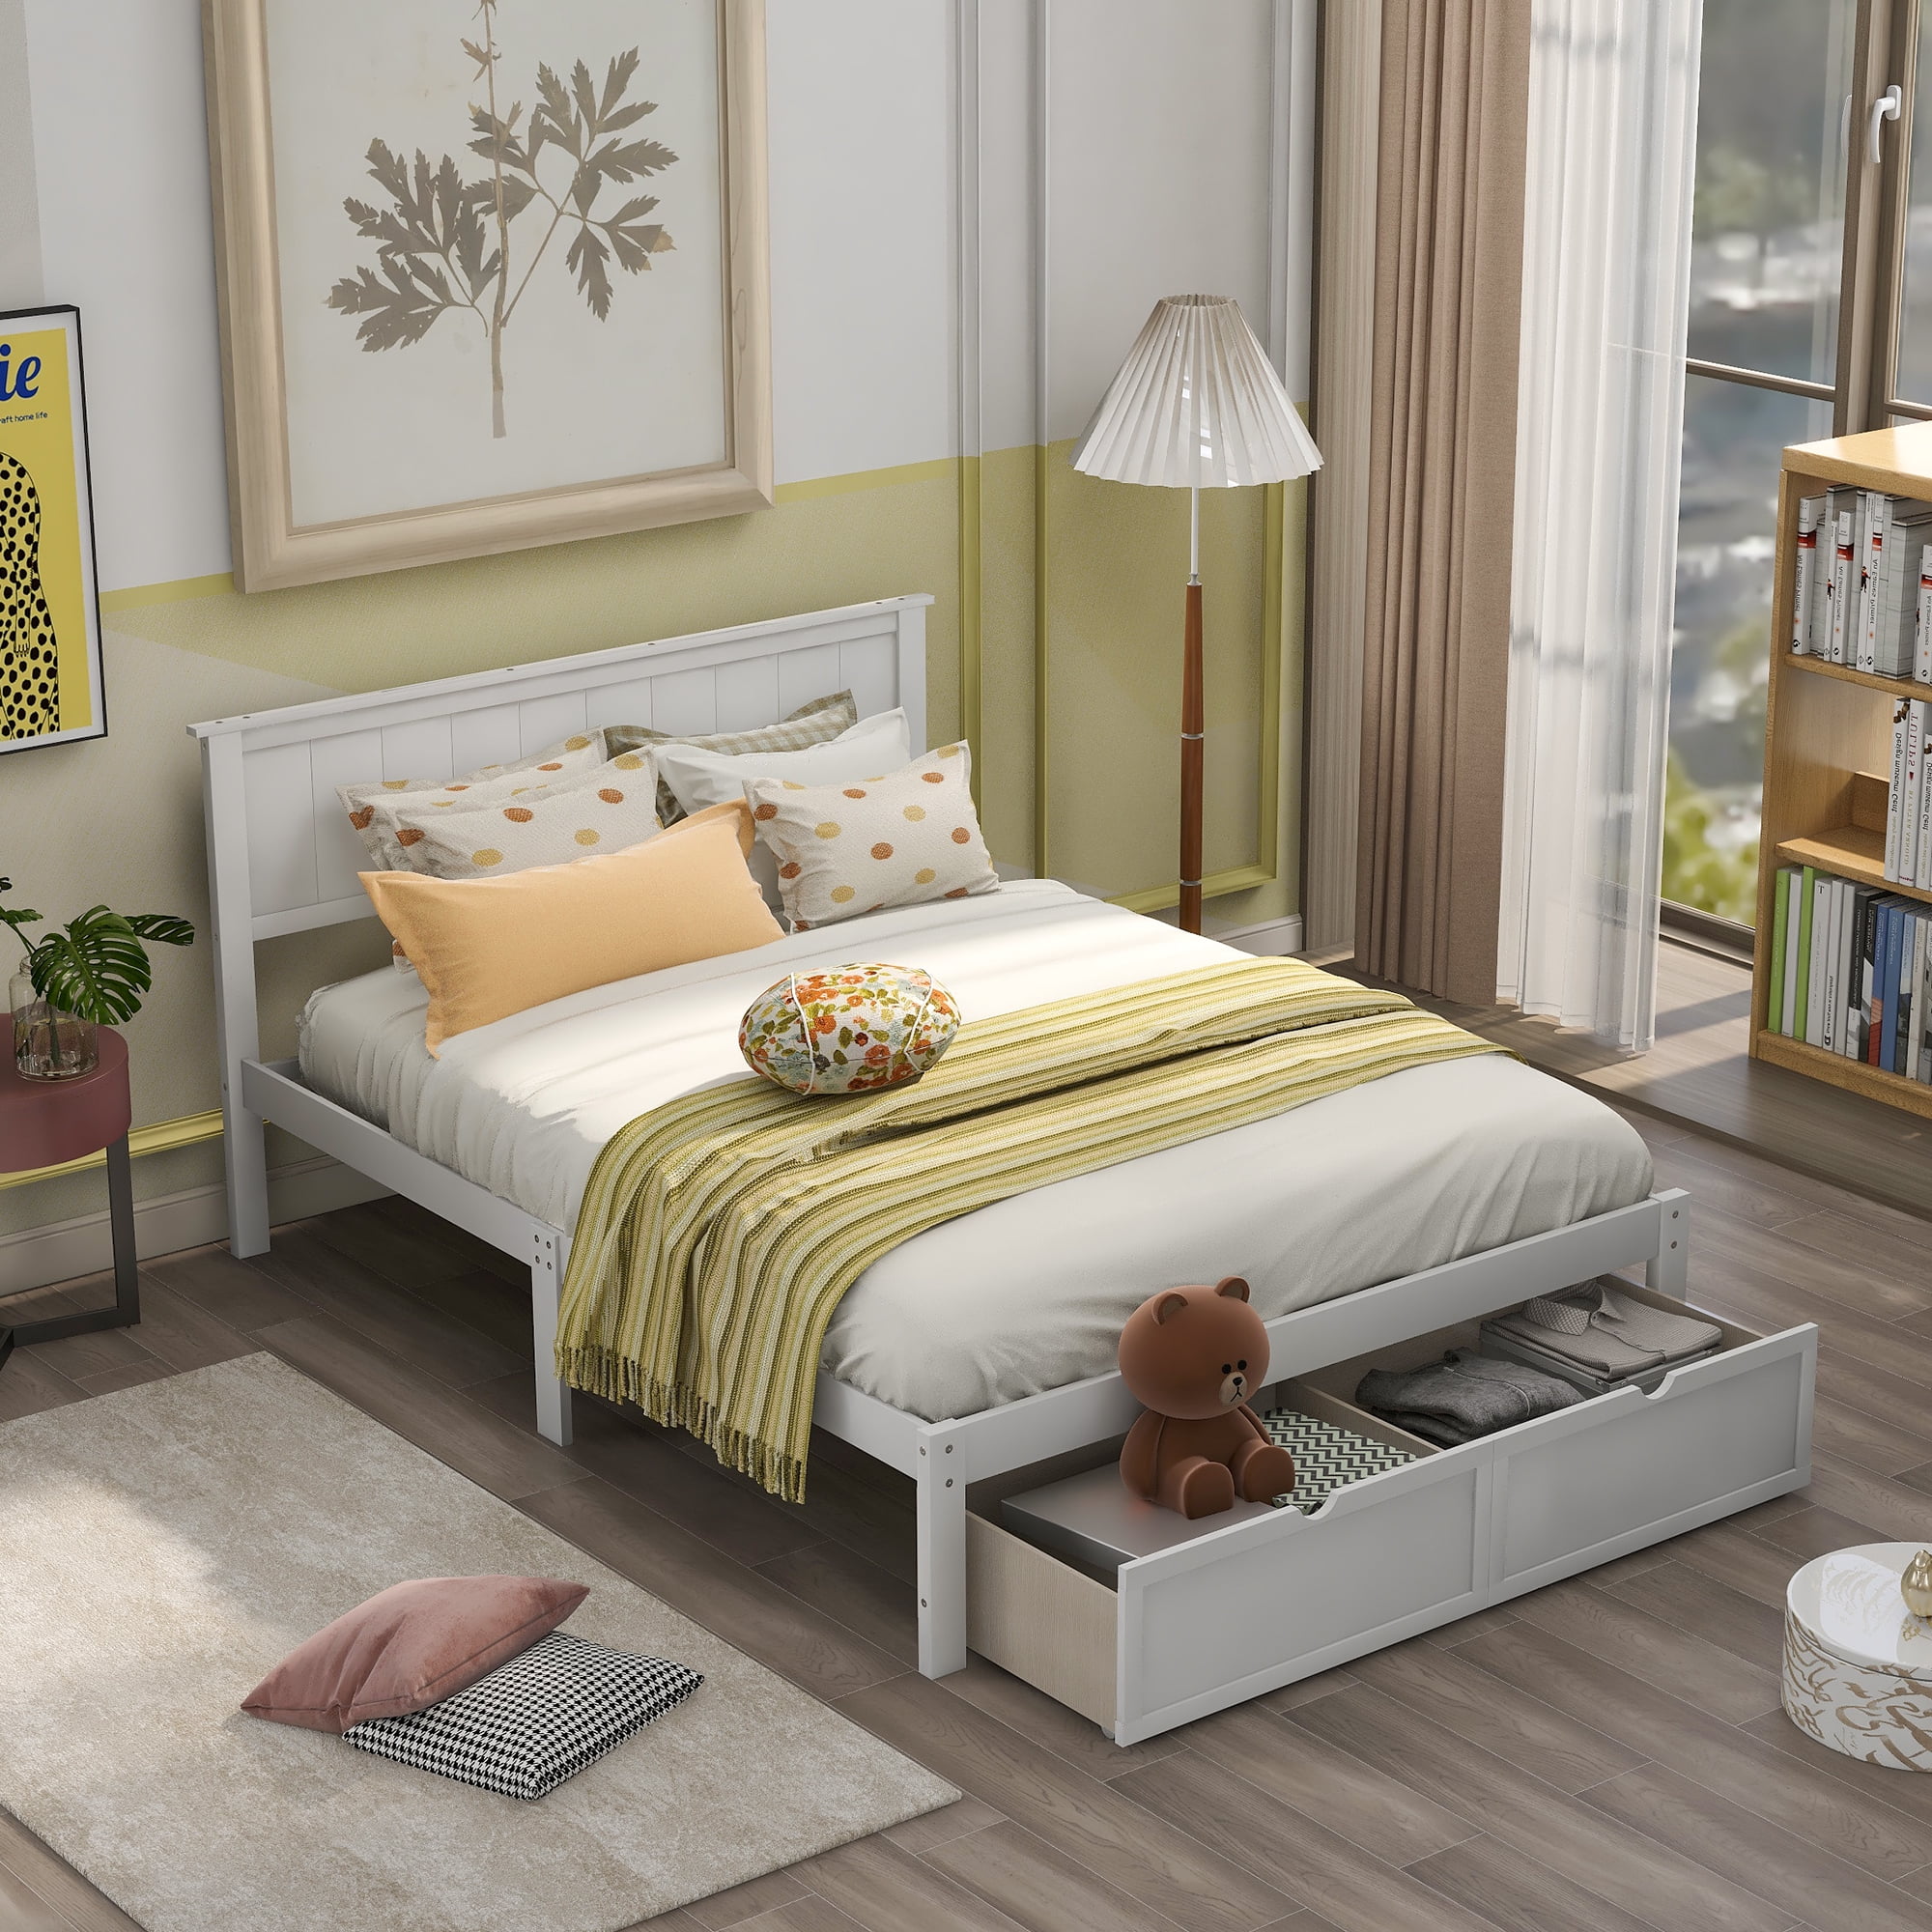 Storage Bed Platform Bed Frame with Headboard, Wood Full Bed Frame for ...